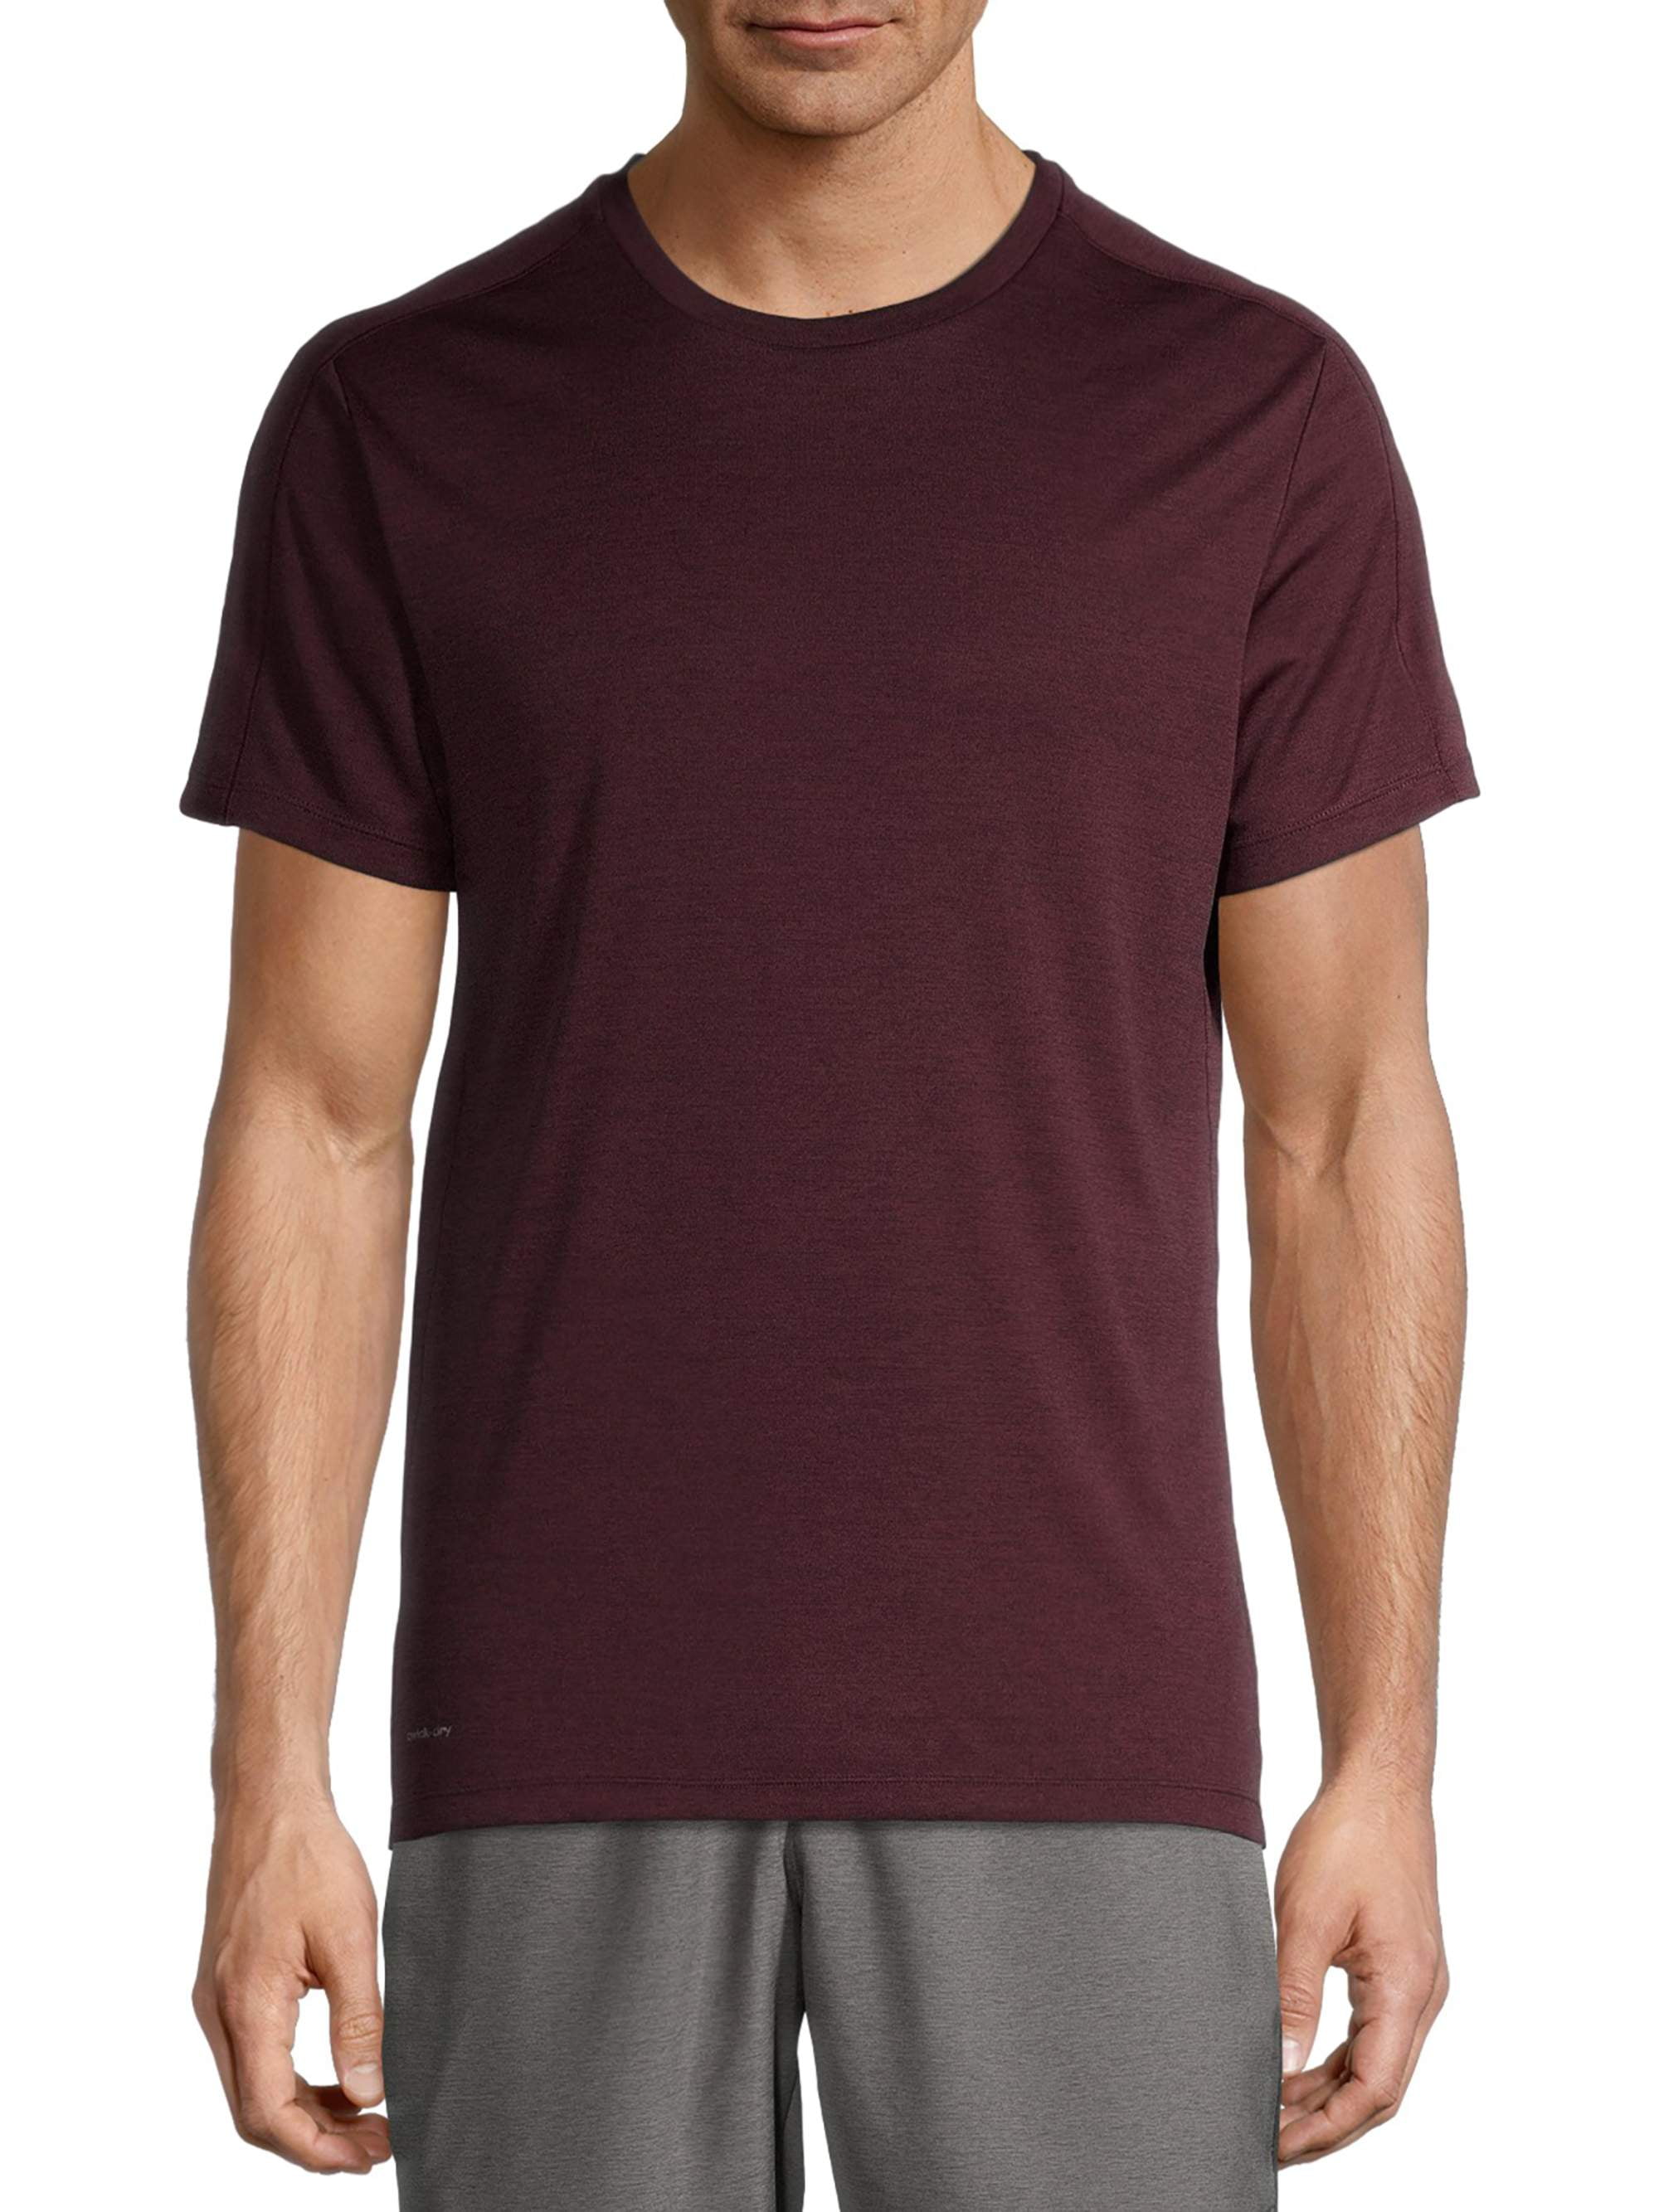 Size 2XL Jacamo Mens T-Shirt 100% Cotton Green @£9.99 